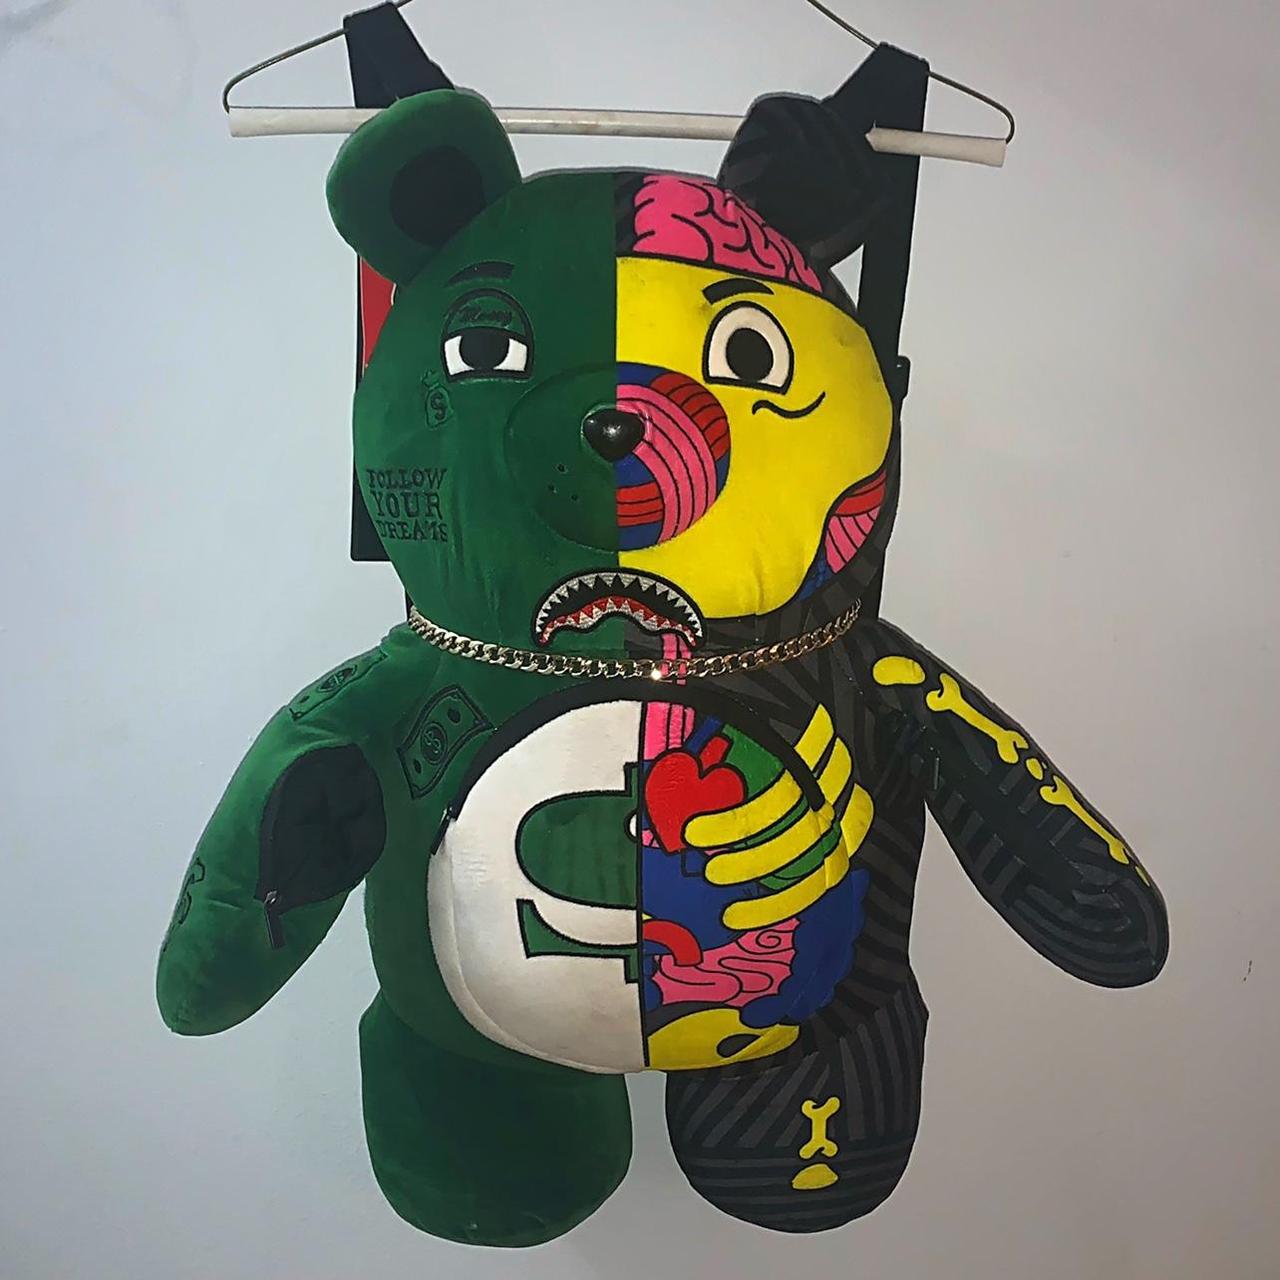 Sprayground backpack teddy bear red/black[has little - Depop